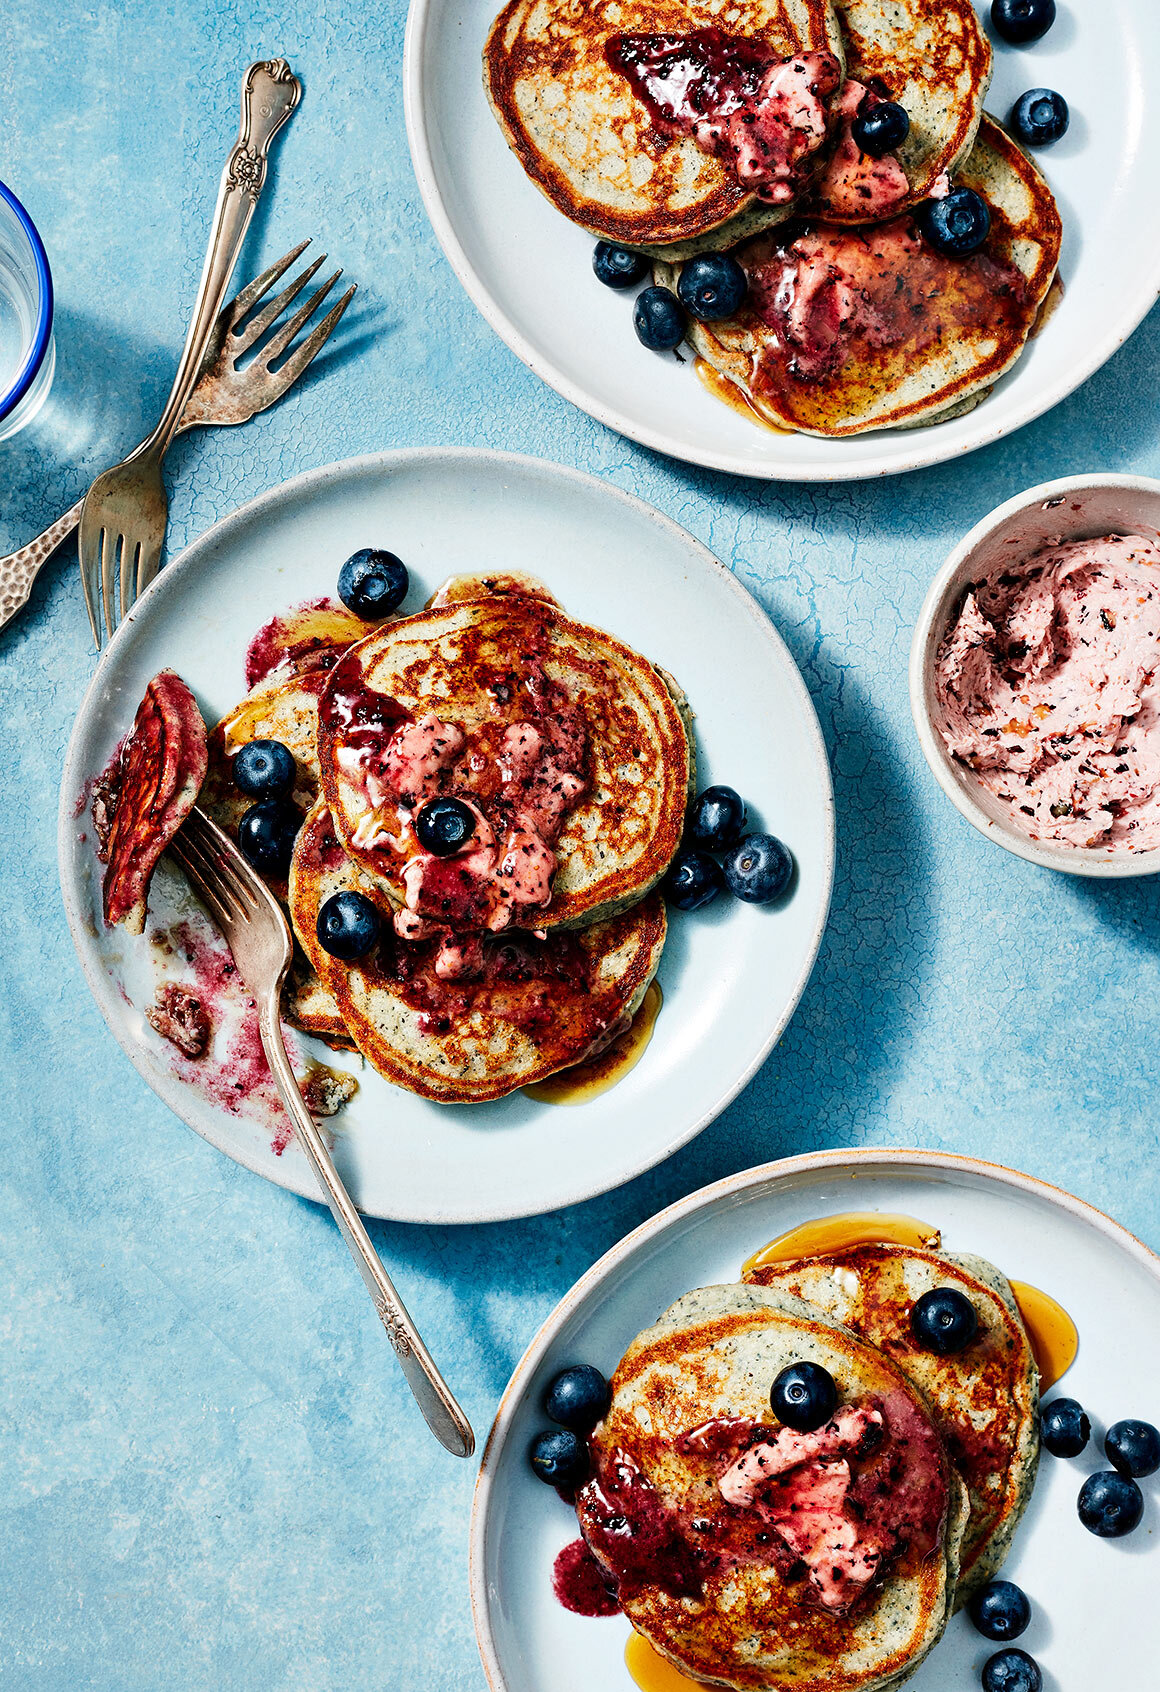 Food-between-freinds-jesse-tyler-ferguson-recipes-cookbook-food-photography-cormeal-pancake-blueberry-breakfast-2289.jpg